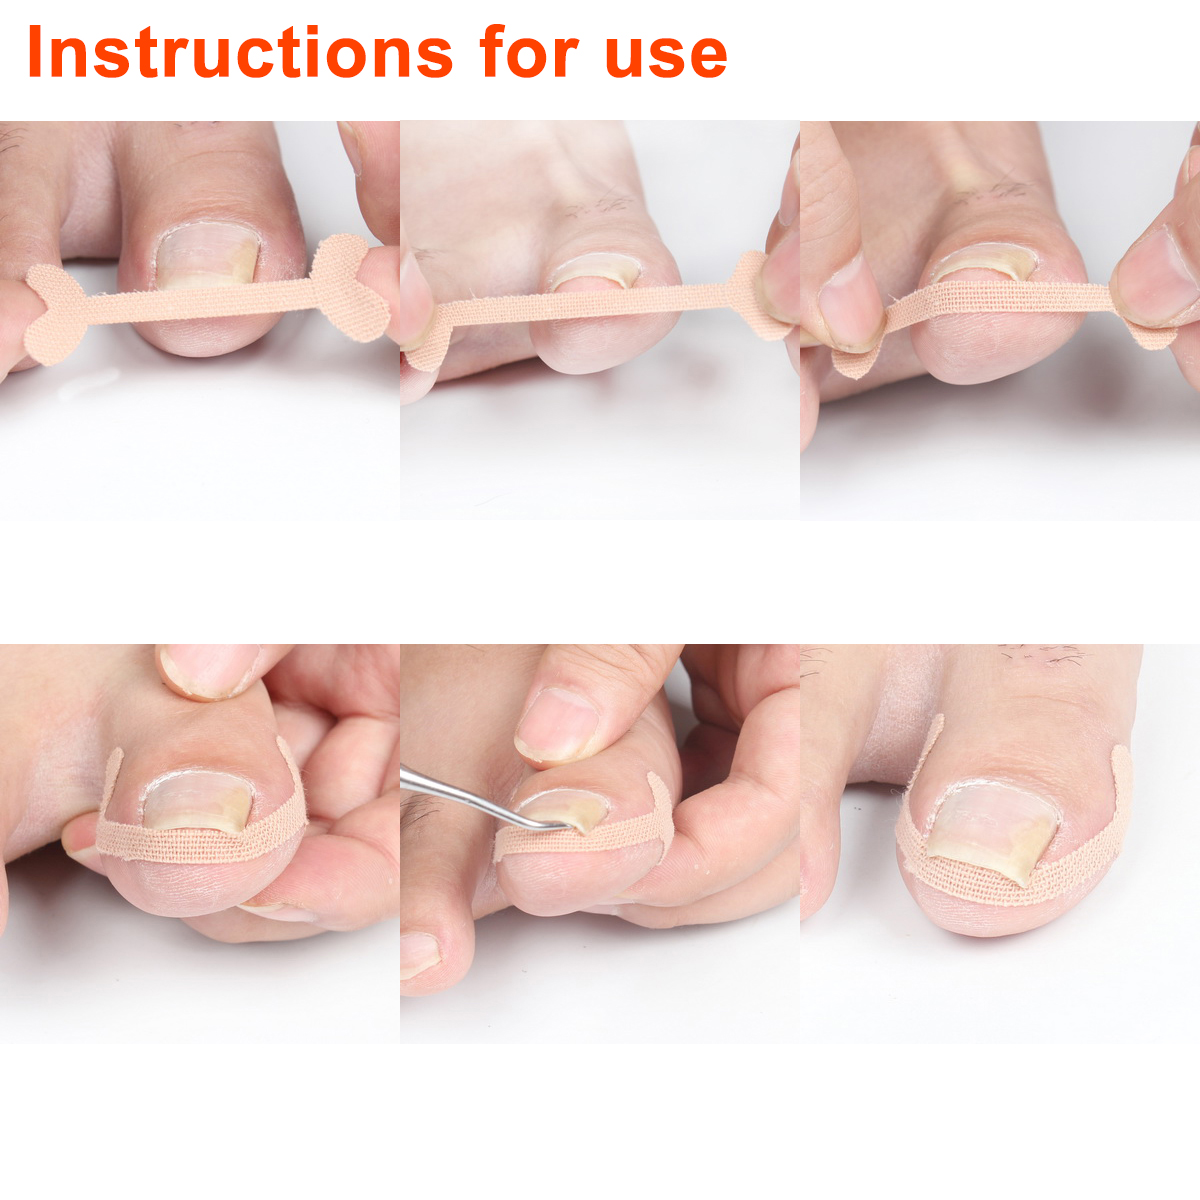 12pcs ingrown toenails band Aid relief pain Paronychia correction pedicure Elastic Force Sticker Repair bandage toe nail care